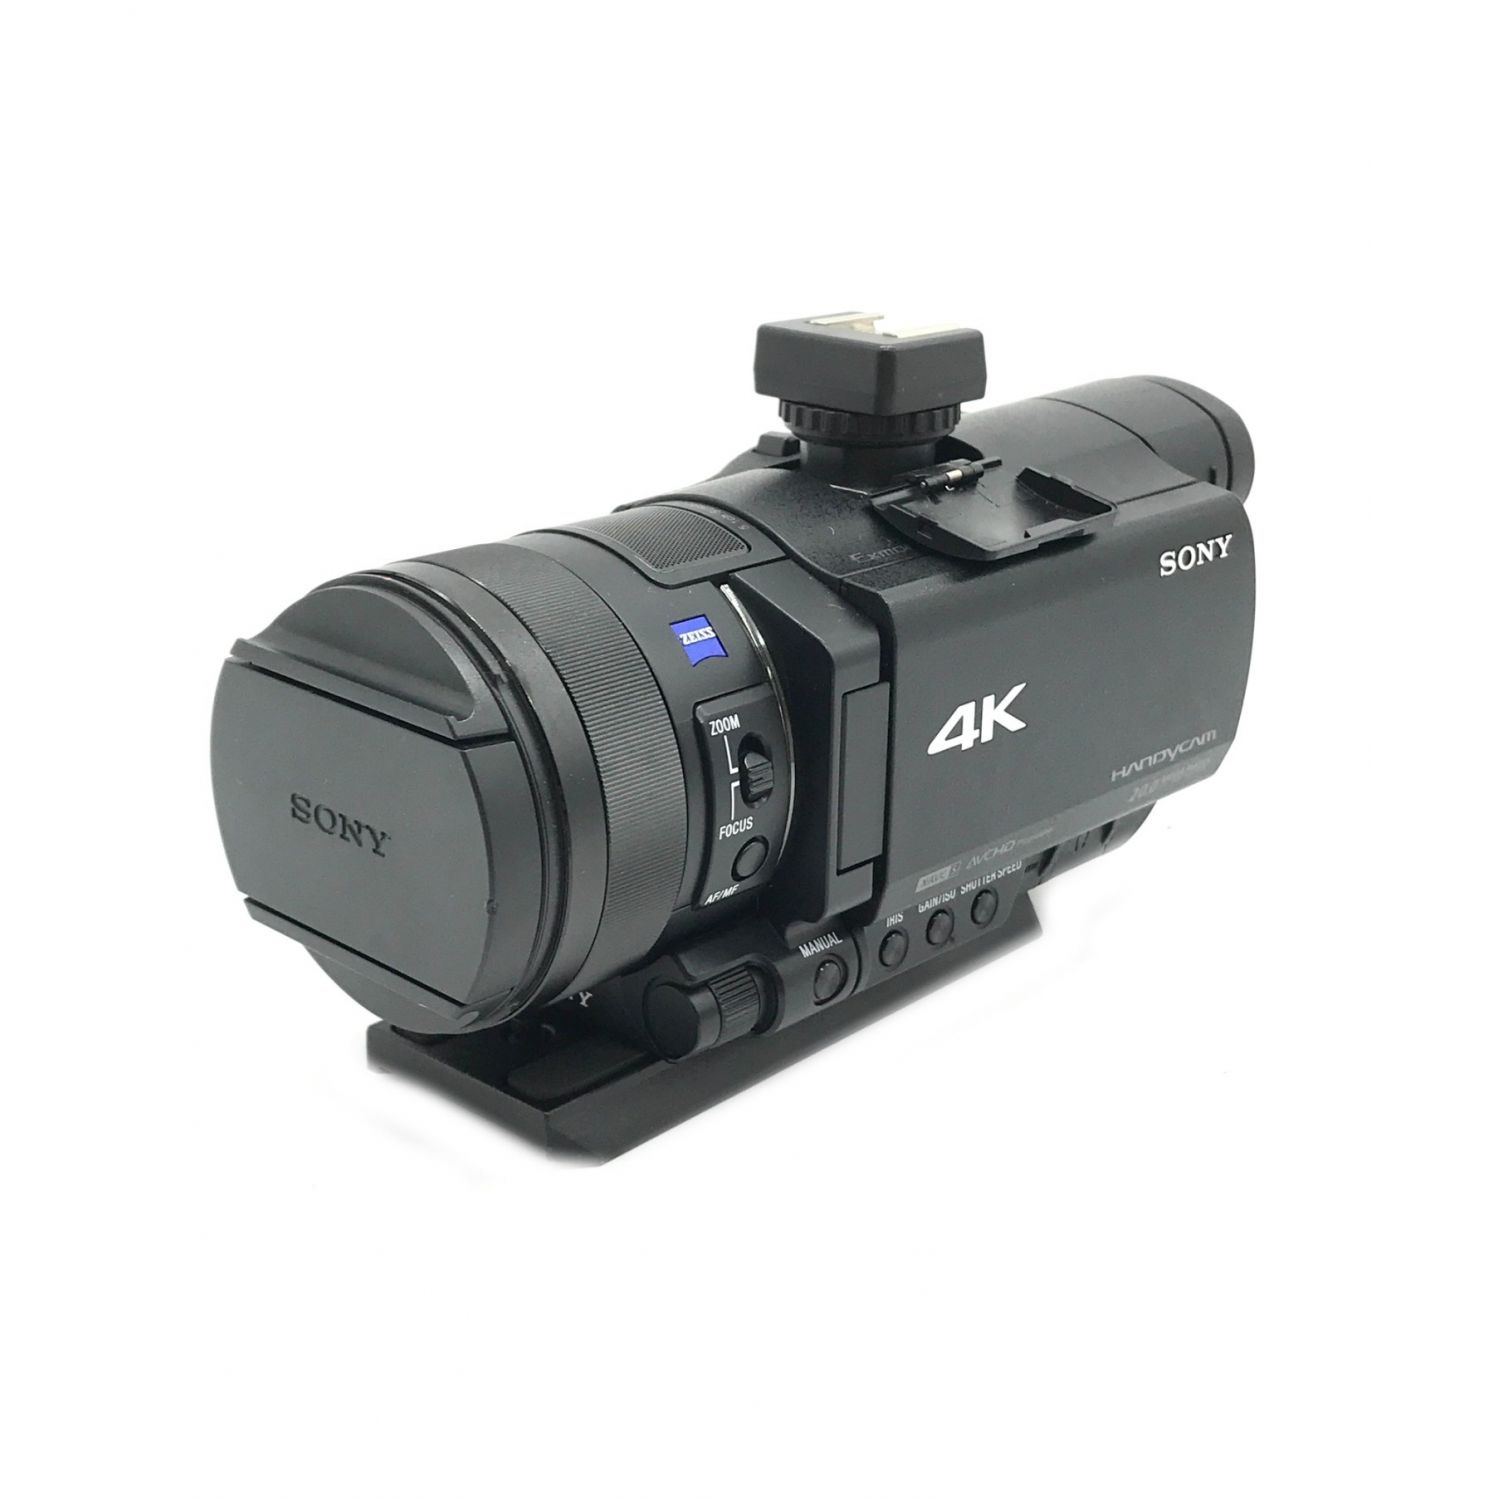 SONY (ソニー) 4K対応デジタルビデオカメラ FDR-AX100 LED